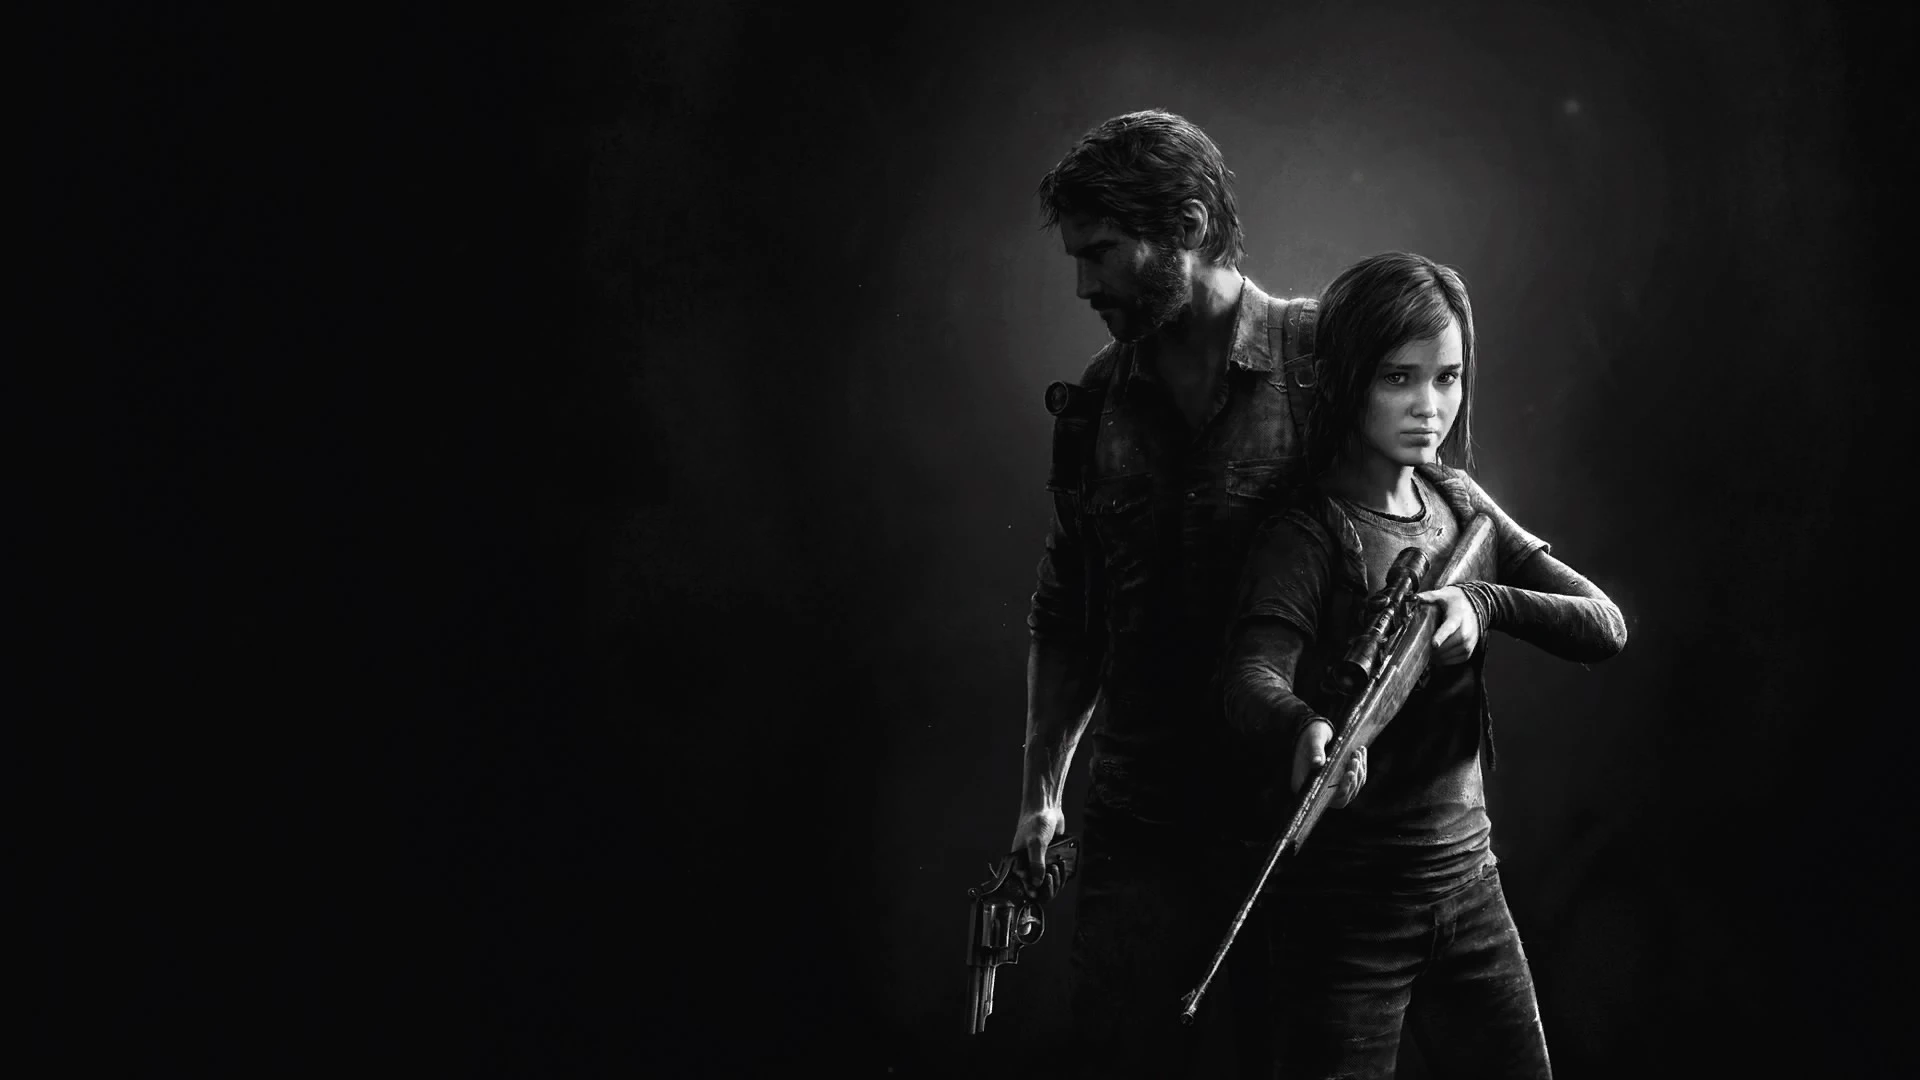 Análisis del maravilloso juego horrible The Last of Us